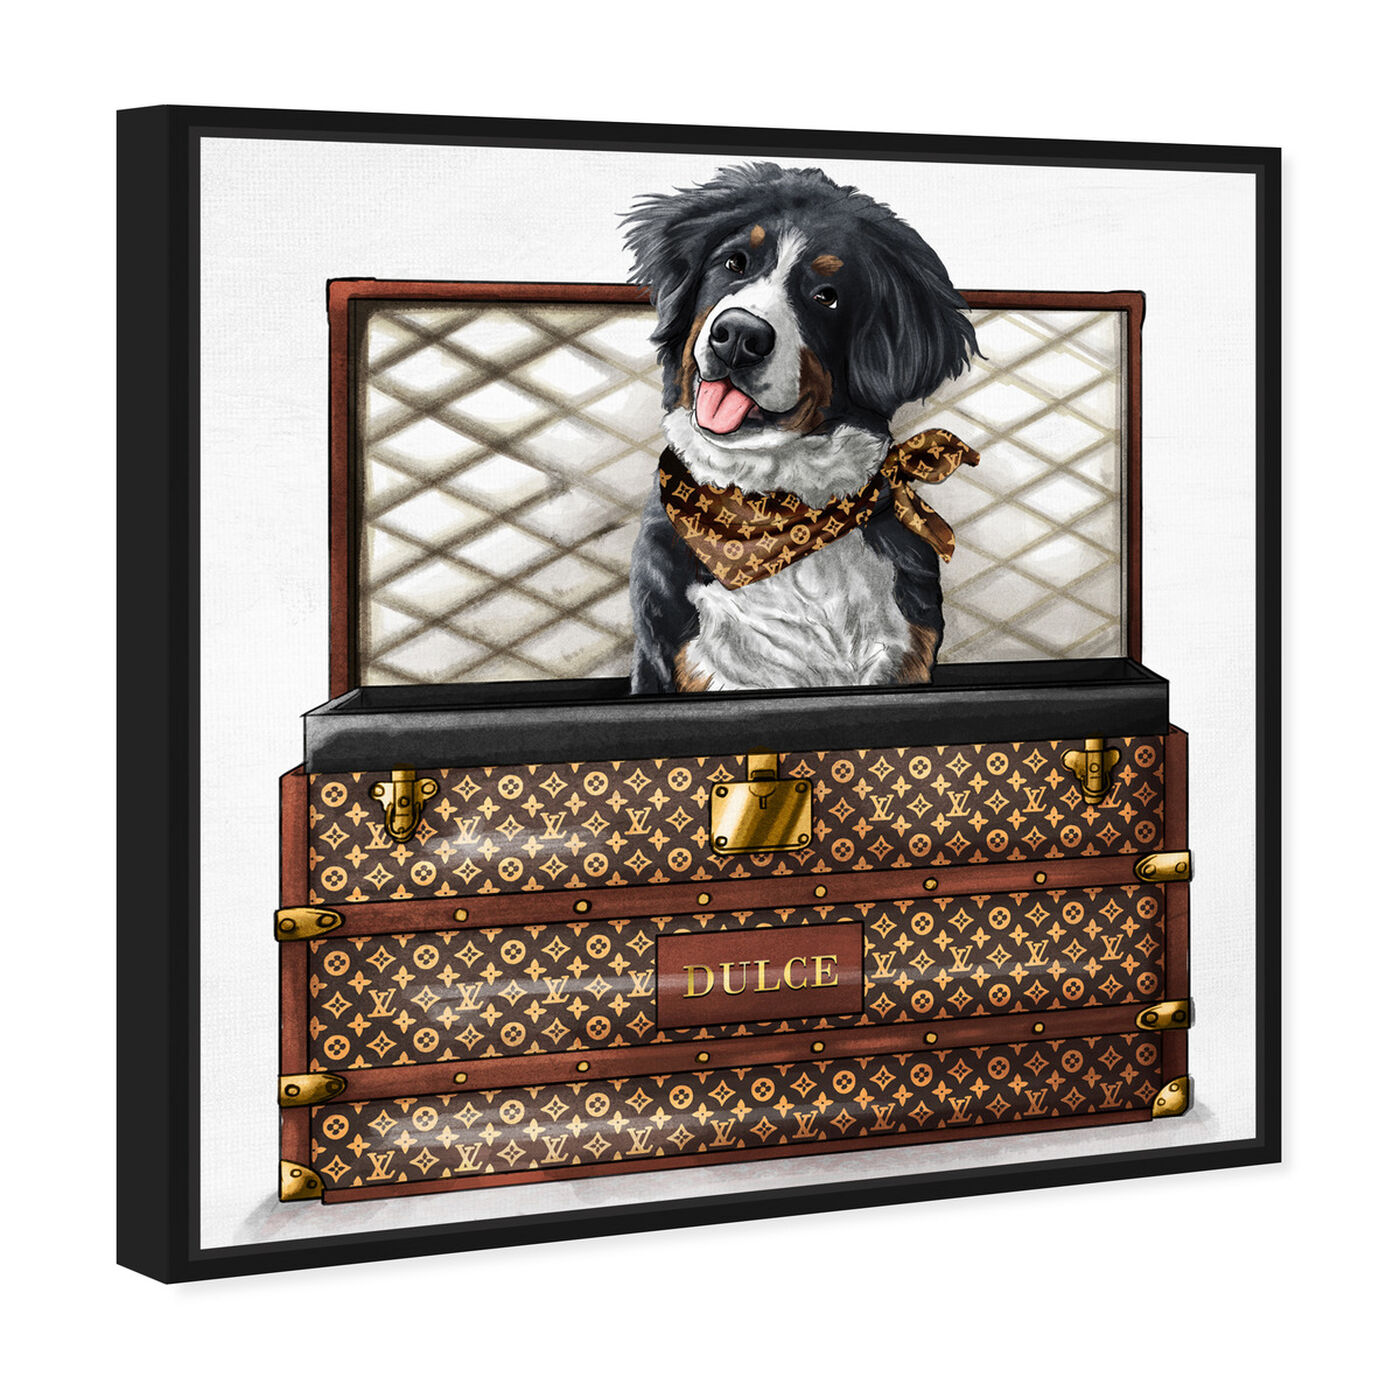 Luxury Traveler - Custom Pet Portrait